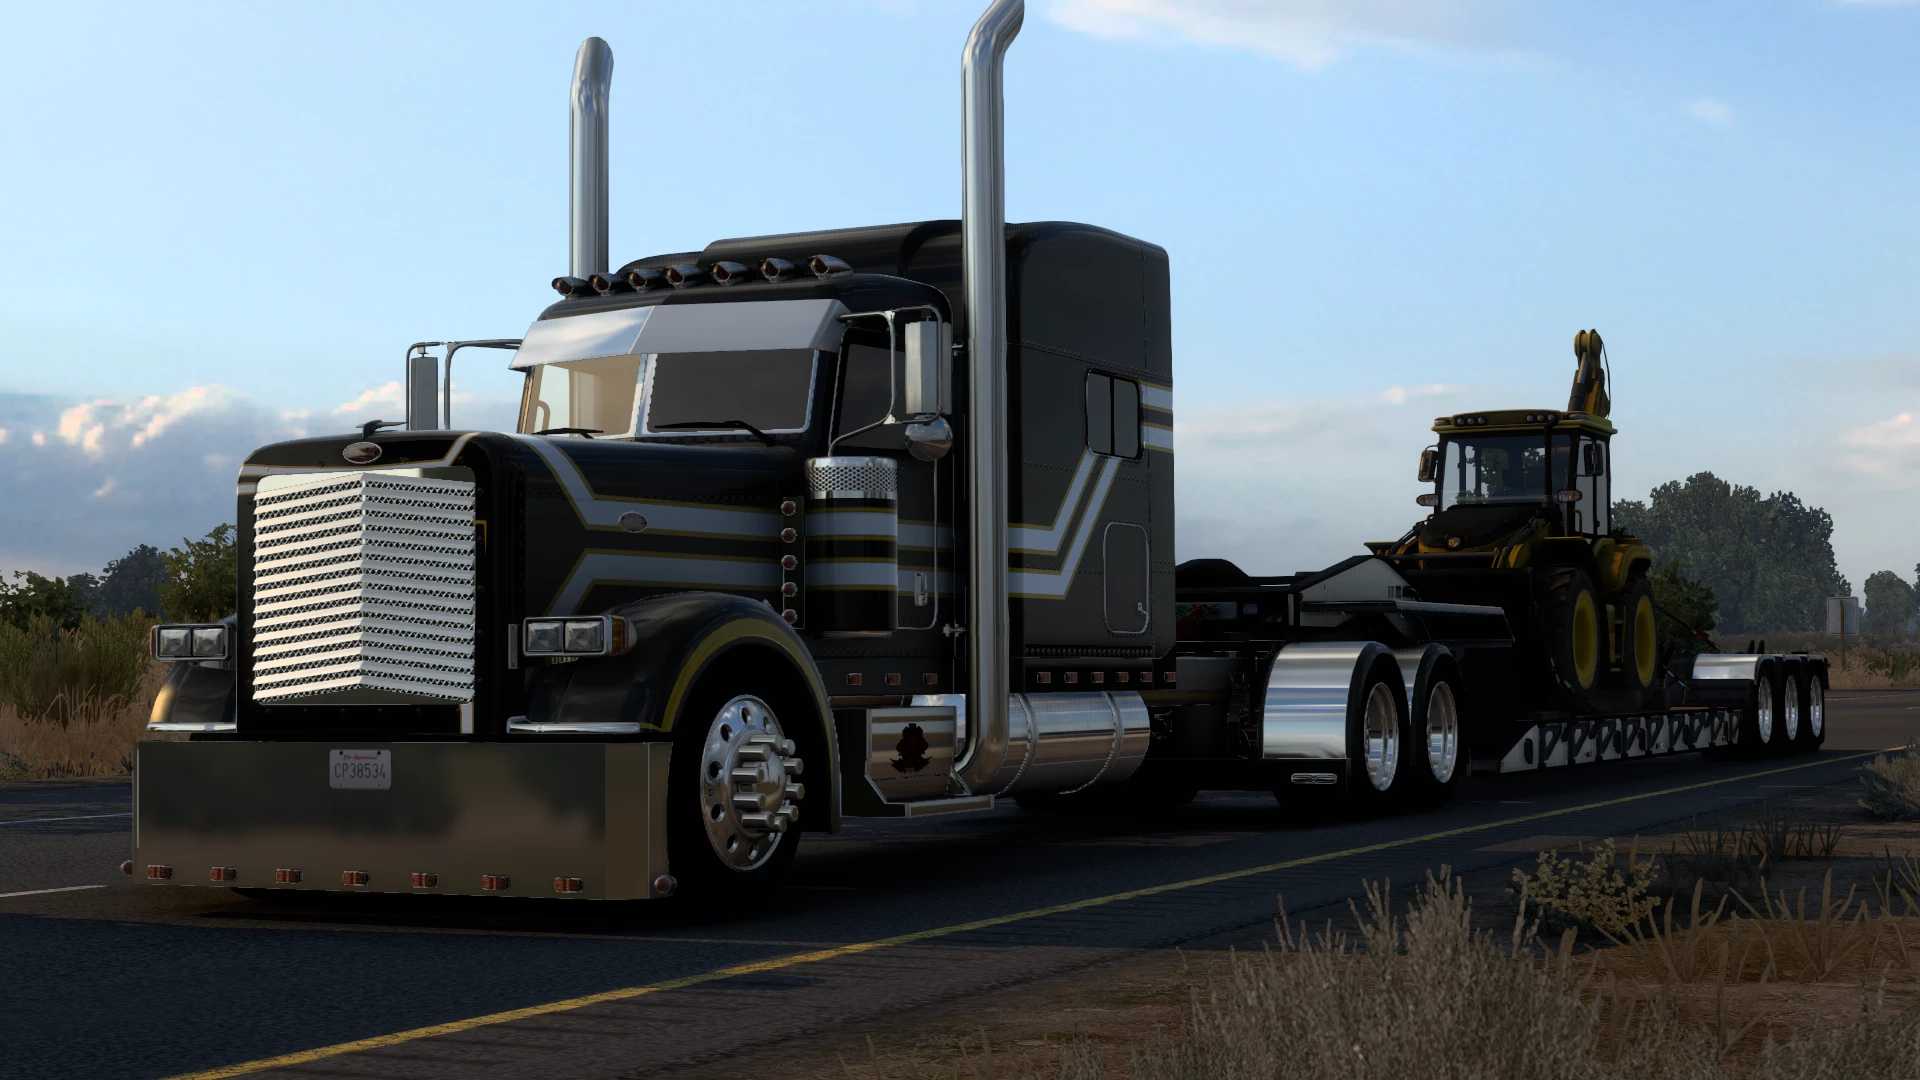 389 American Truck Simulator mods